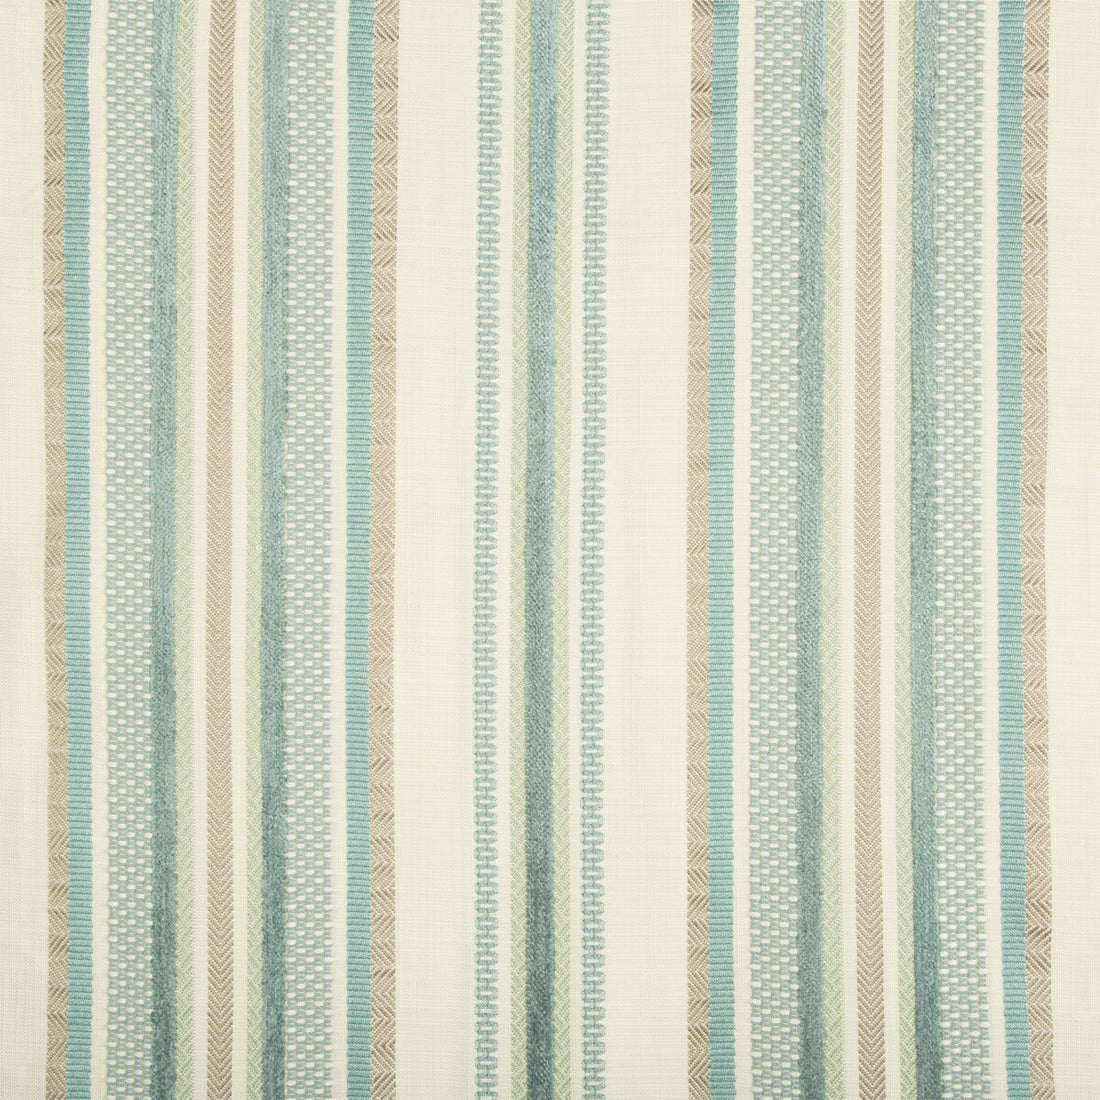 Kravet Design fabric in 34727-1615 color - pattern 34727.1615.0 - by Kravet Design in the Gis collection